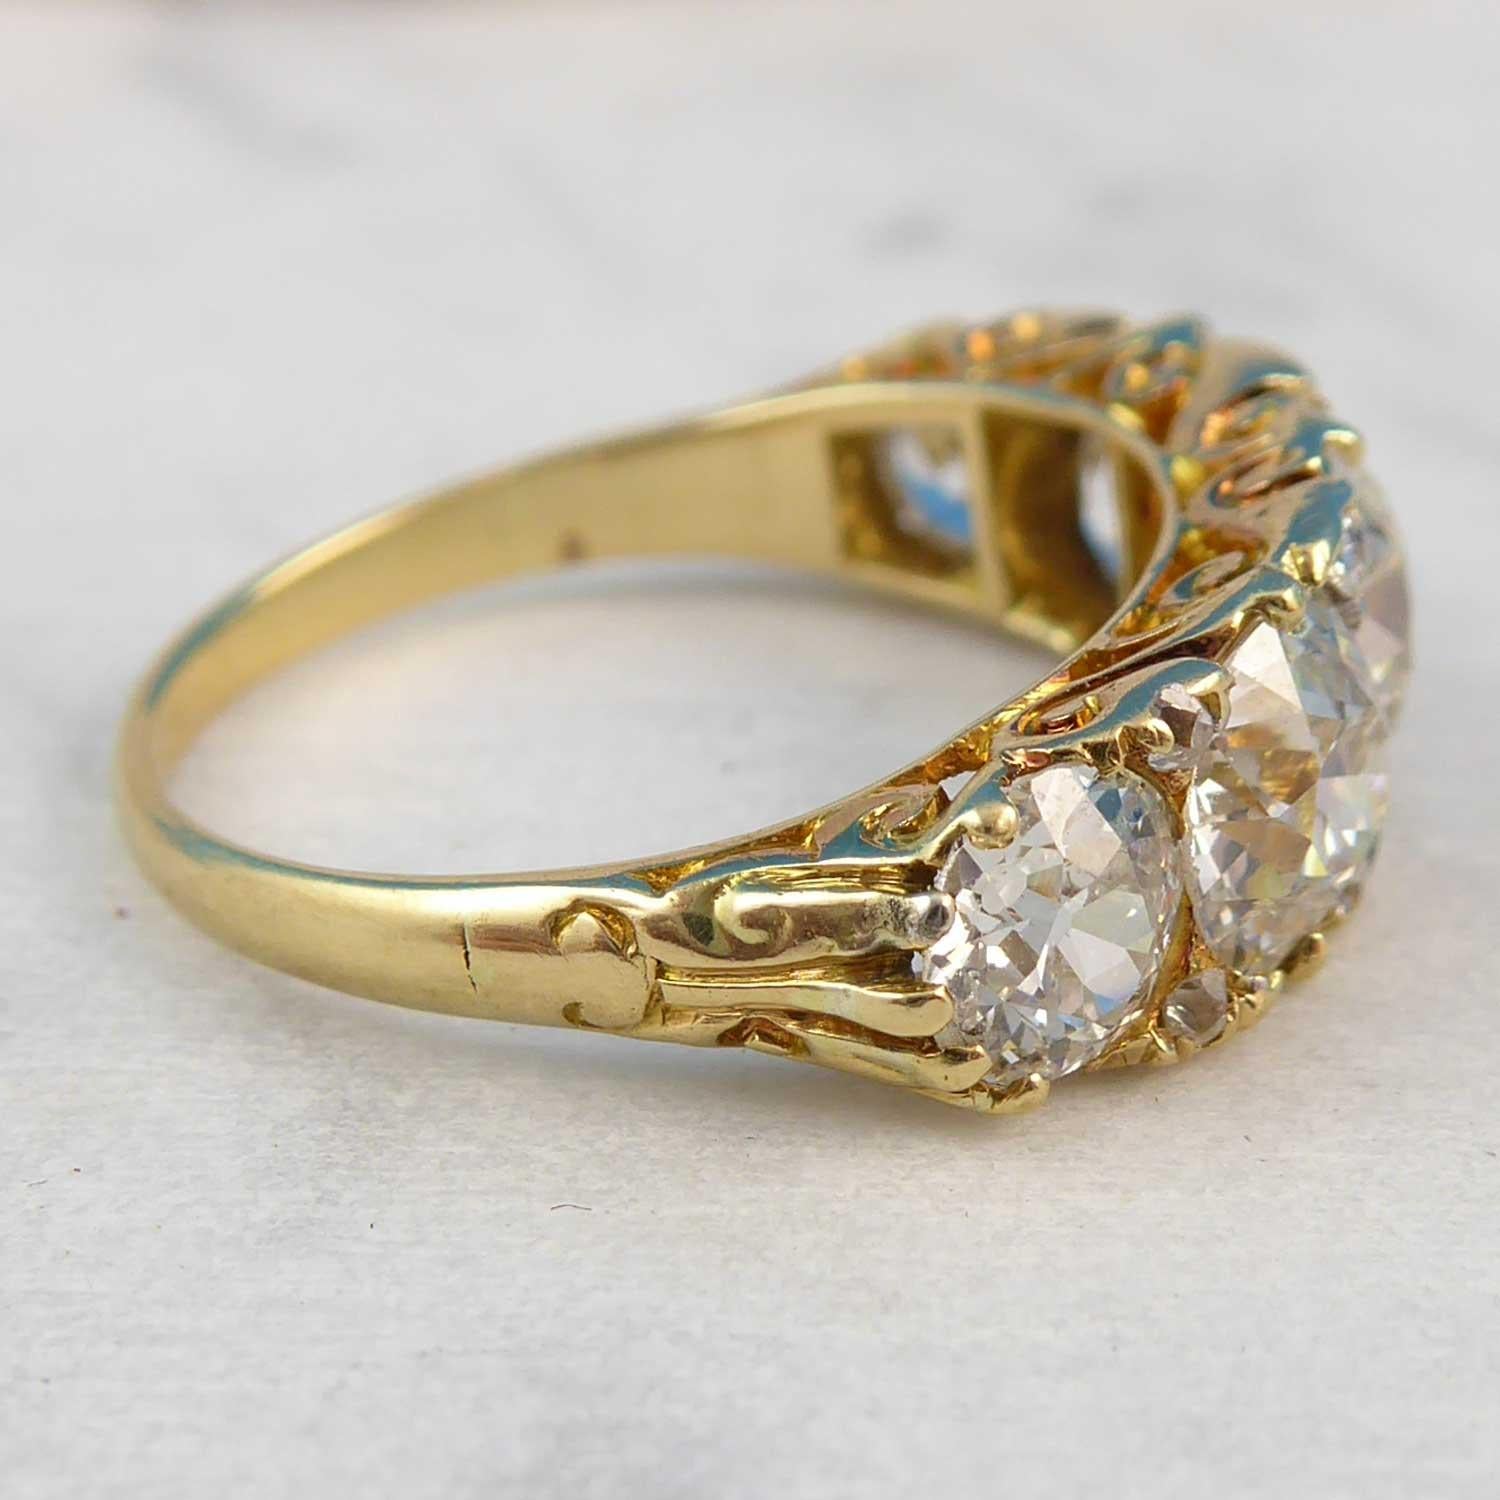 Women's Victorian 3.18 Carat Diamond Ring, Old European Cut Diamonds, circa 1890